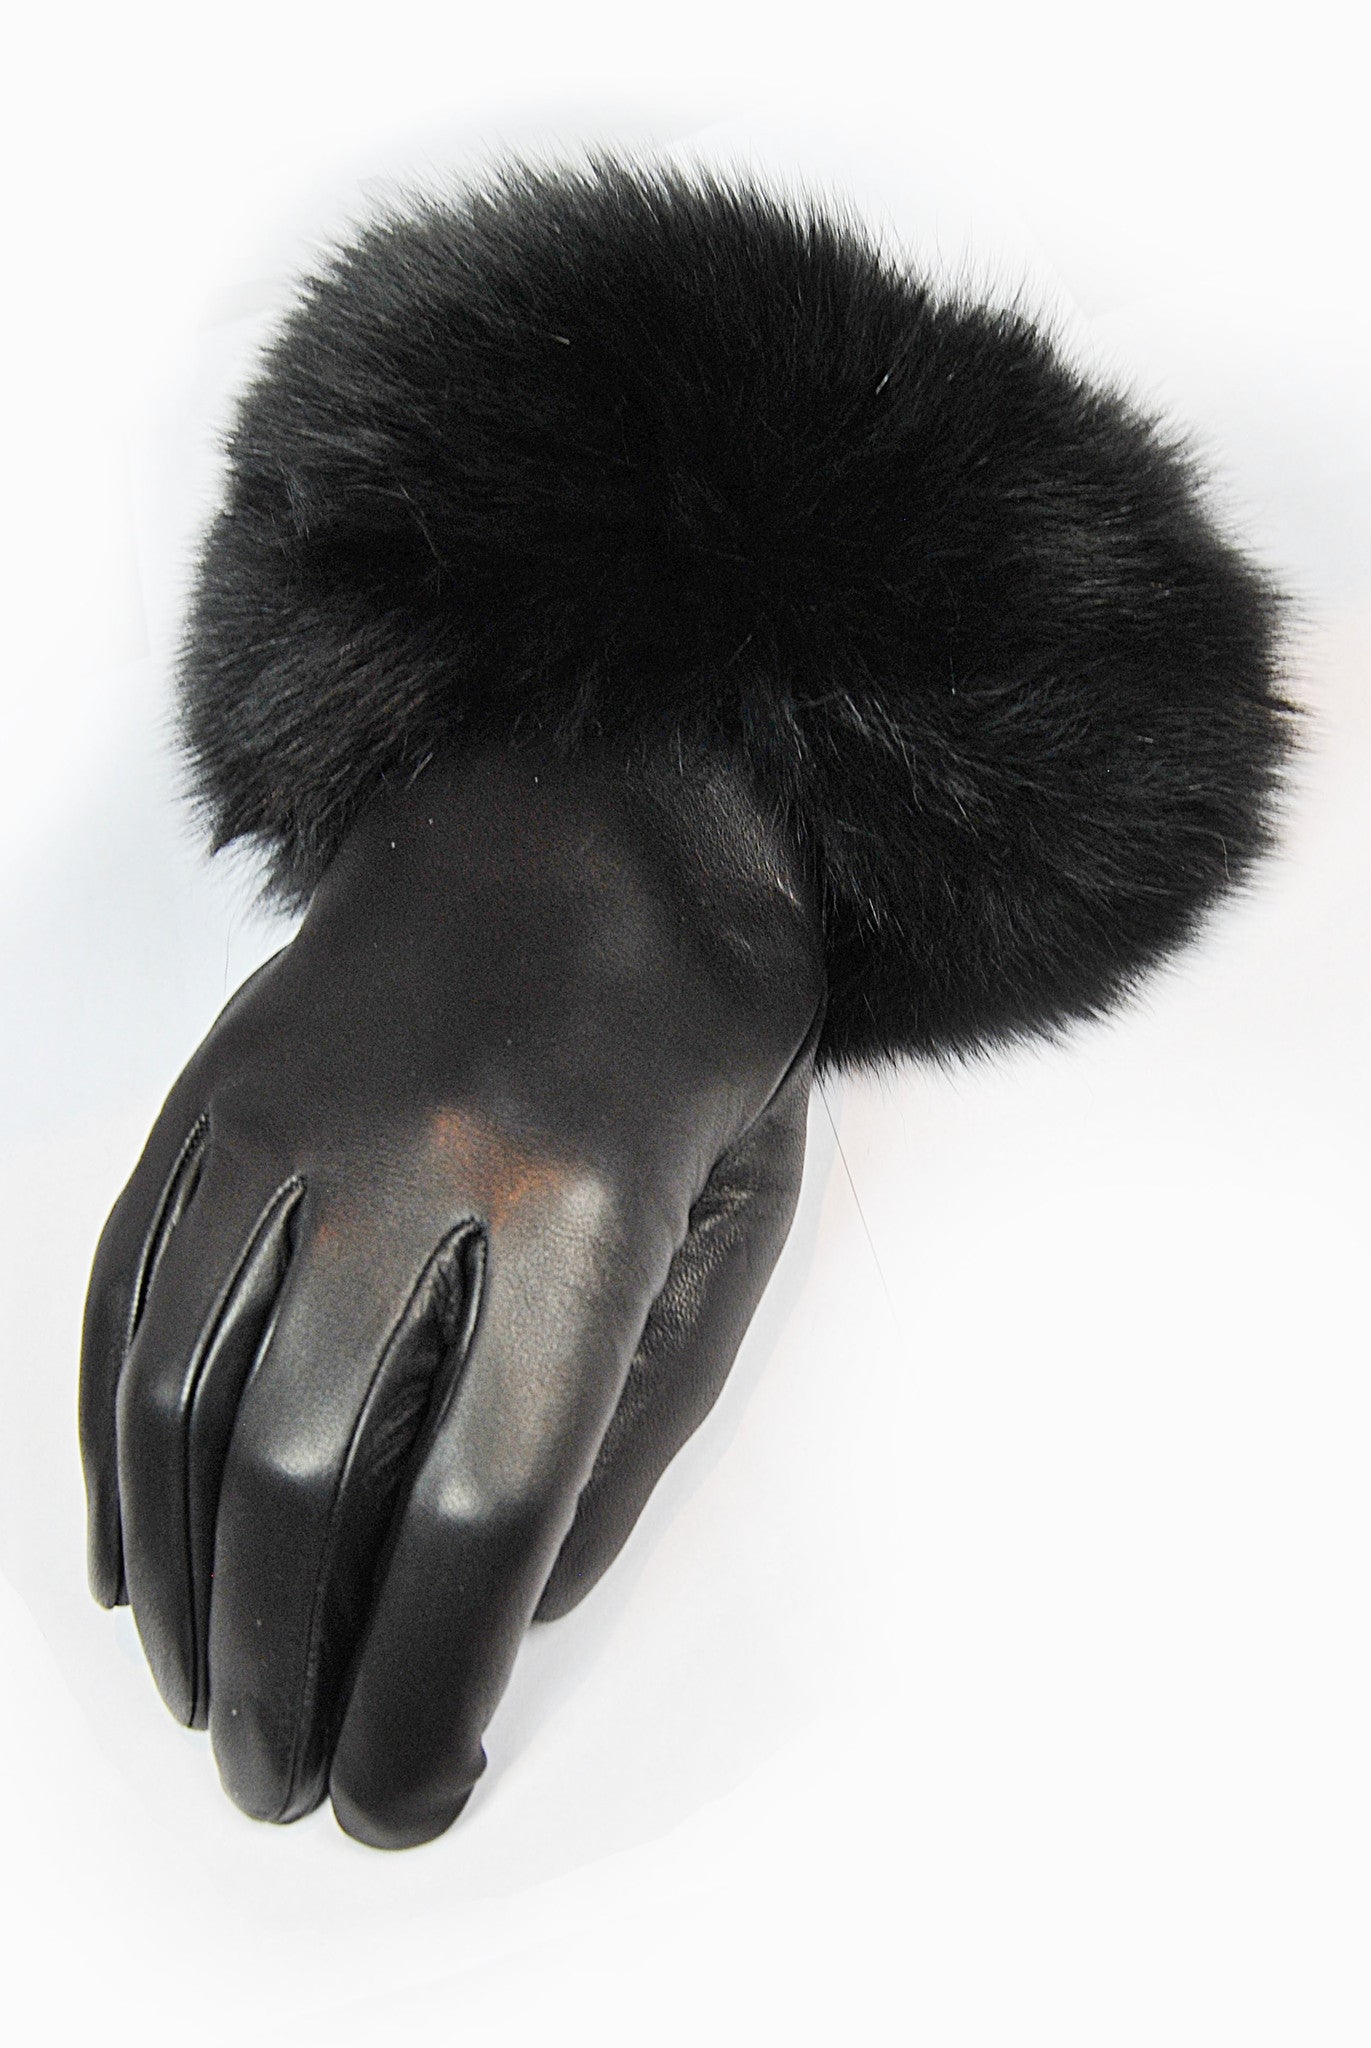 Santacana Black leather Gloves with Fox Fur Trim - Jessimara